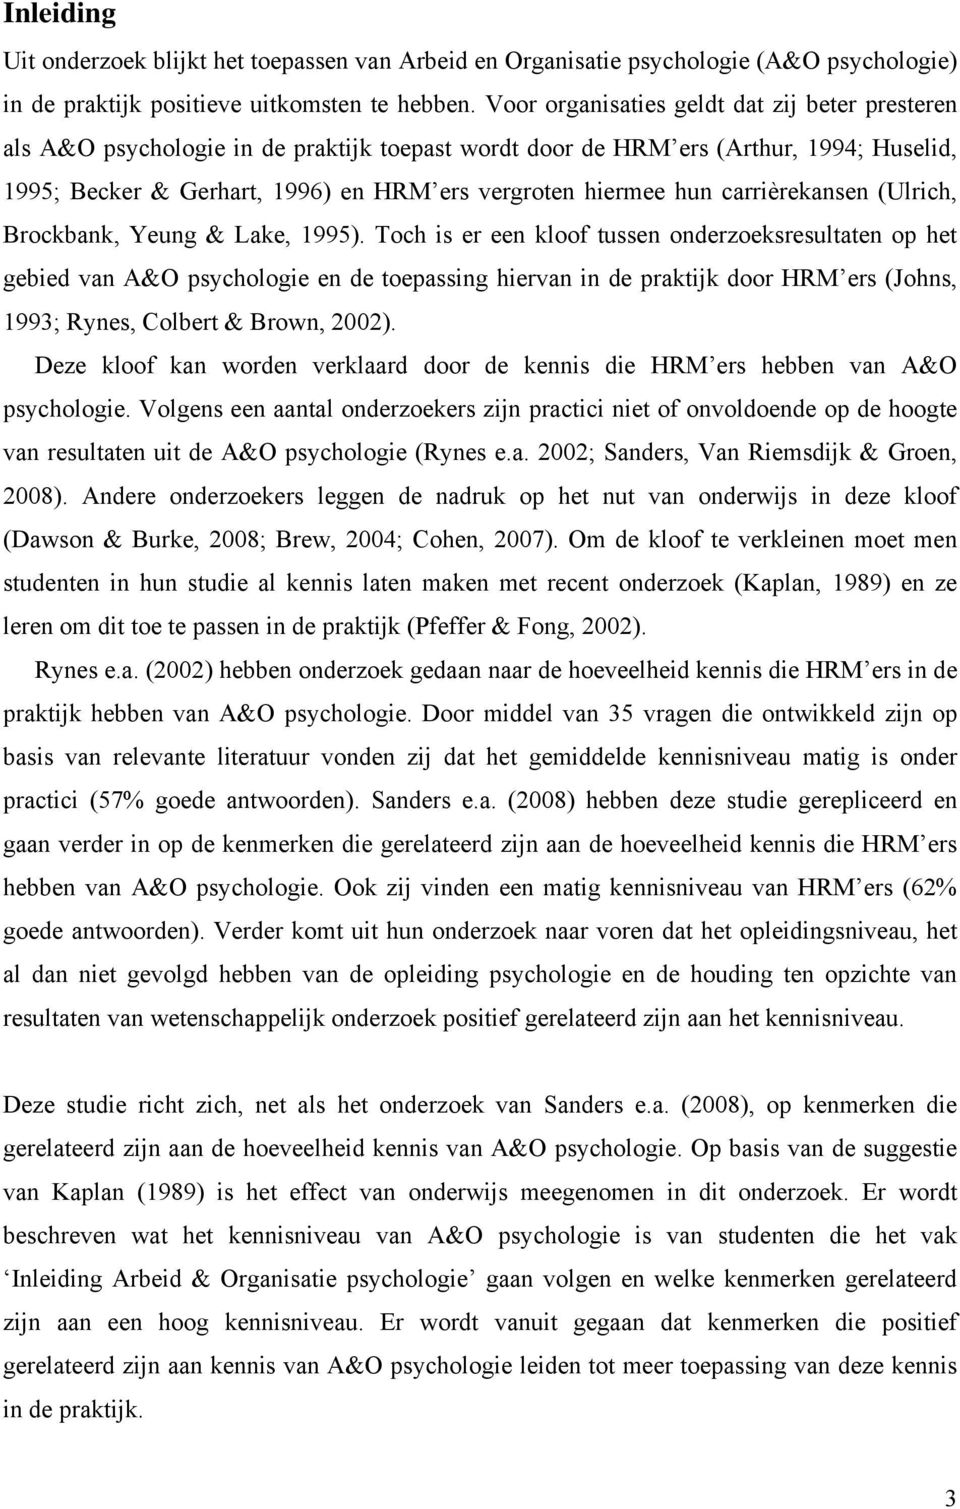 carrièrekansen (Ulrich, Brockbank, Yeung & Lake, 1995).